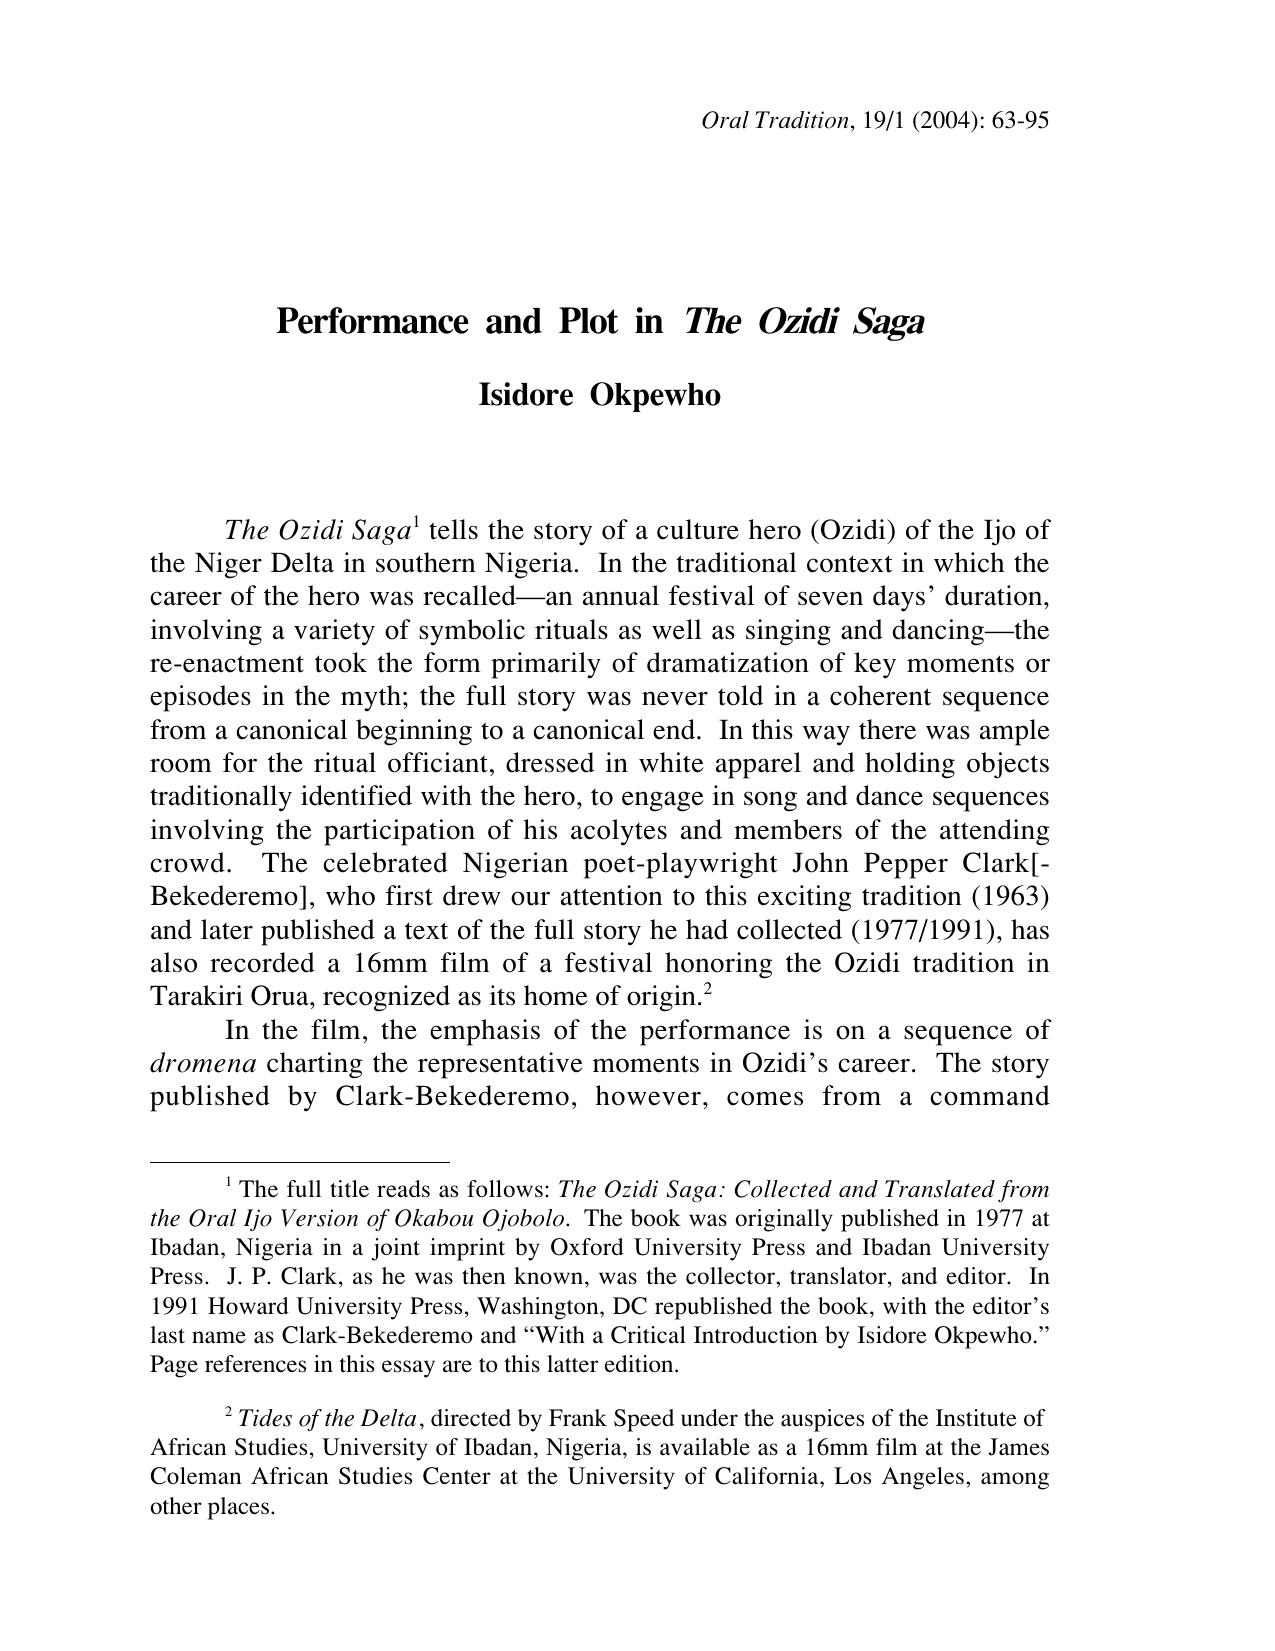 Performance and Plot in The Ozidi Saga 2004